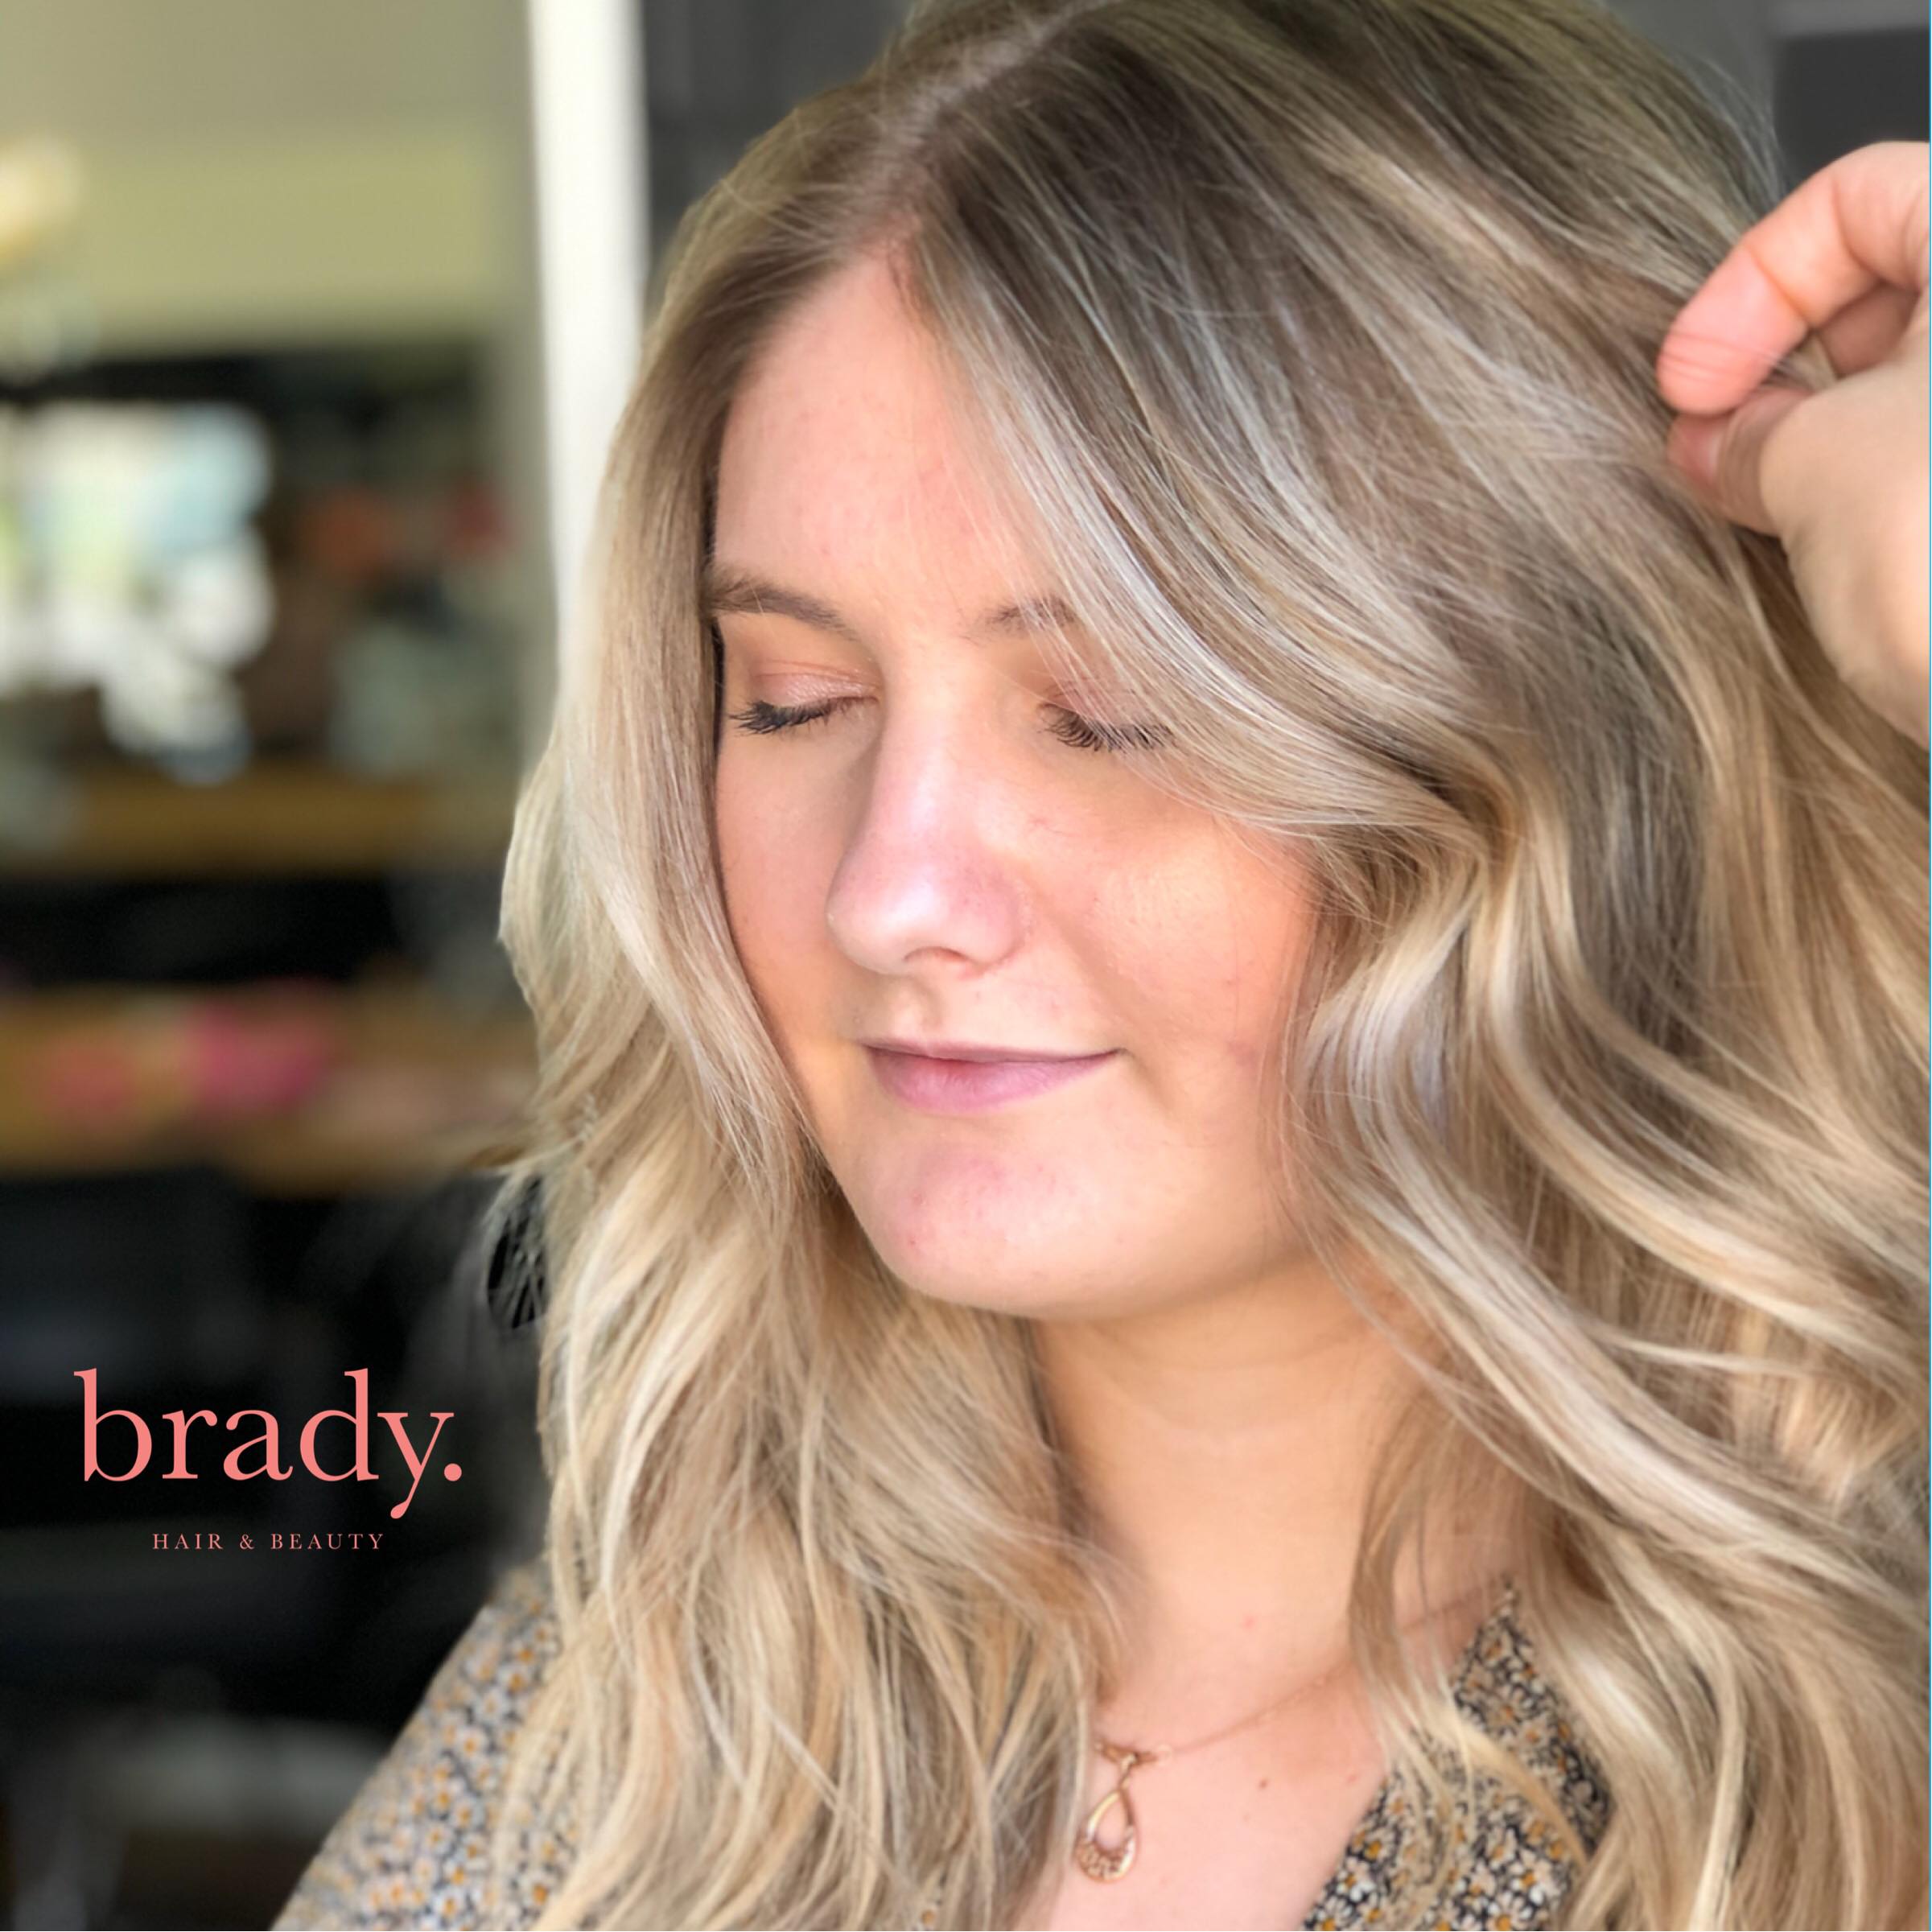 Hairstyle Gallery — Brady. Hair & Beauty